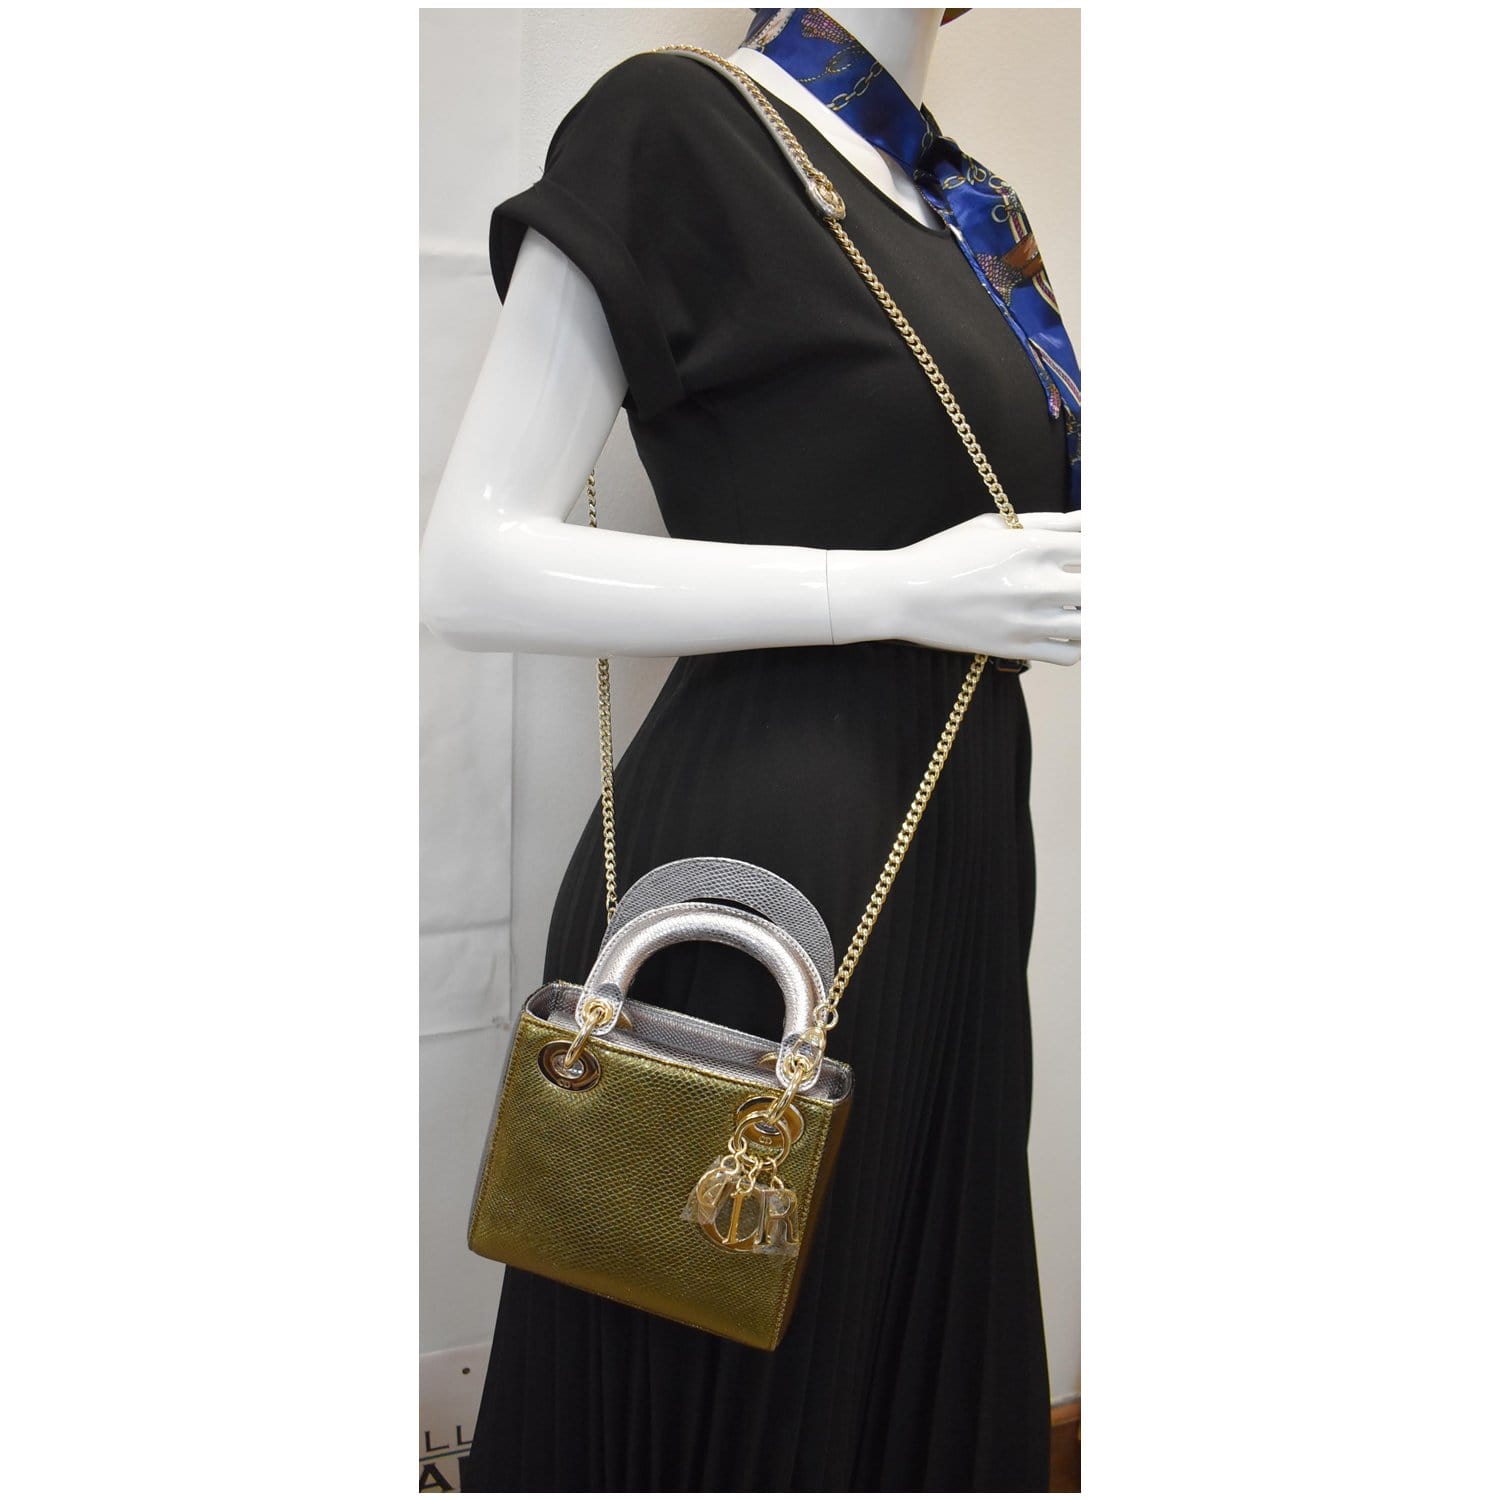 Thoughts on mini Lady Dior lizard : r/handbags